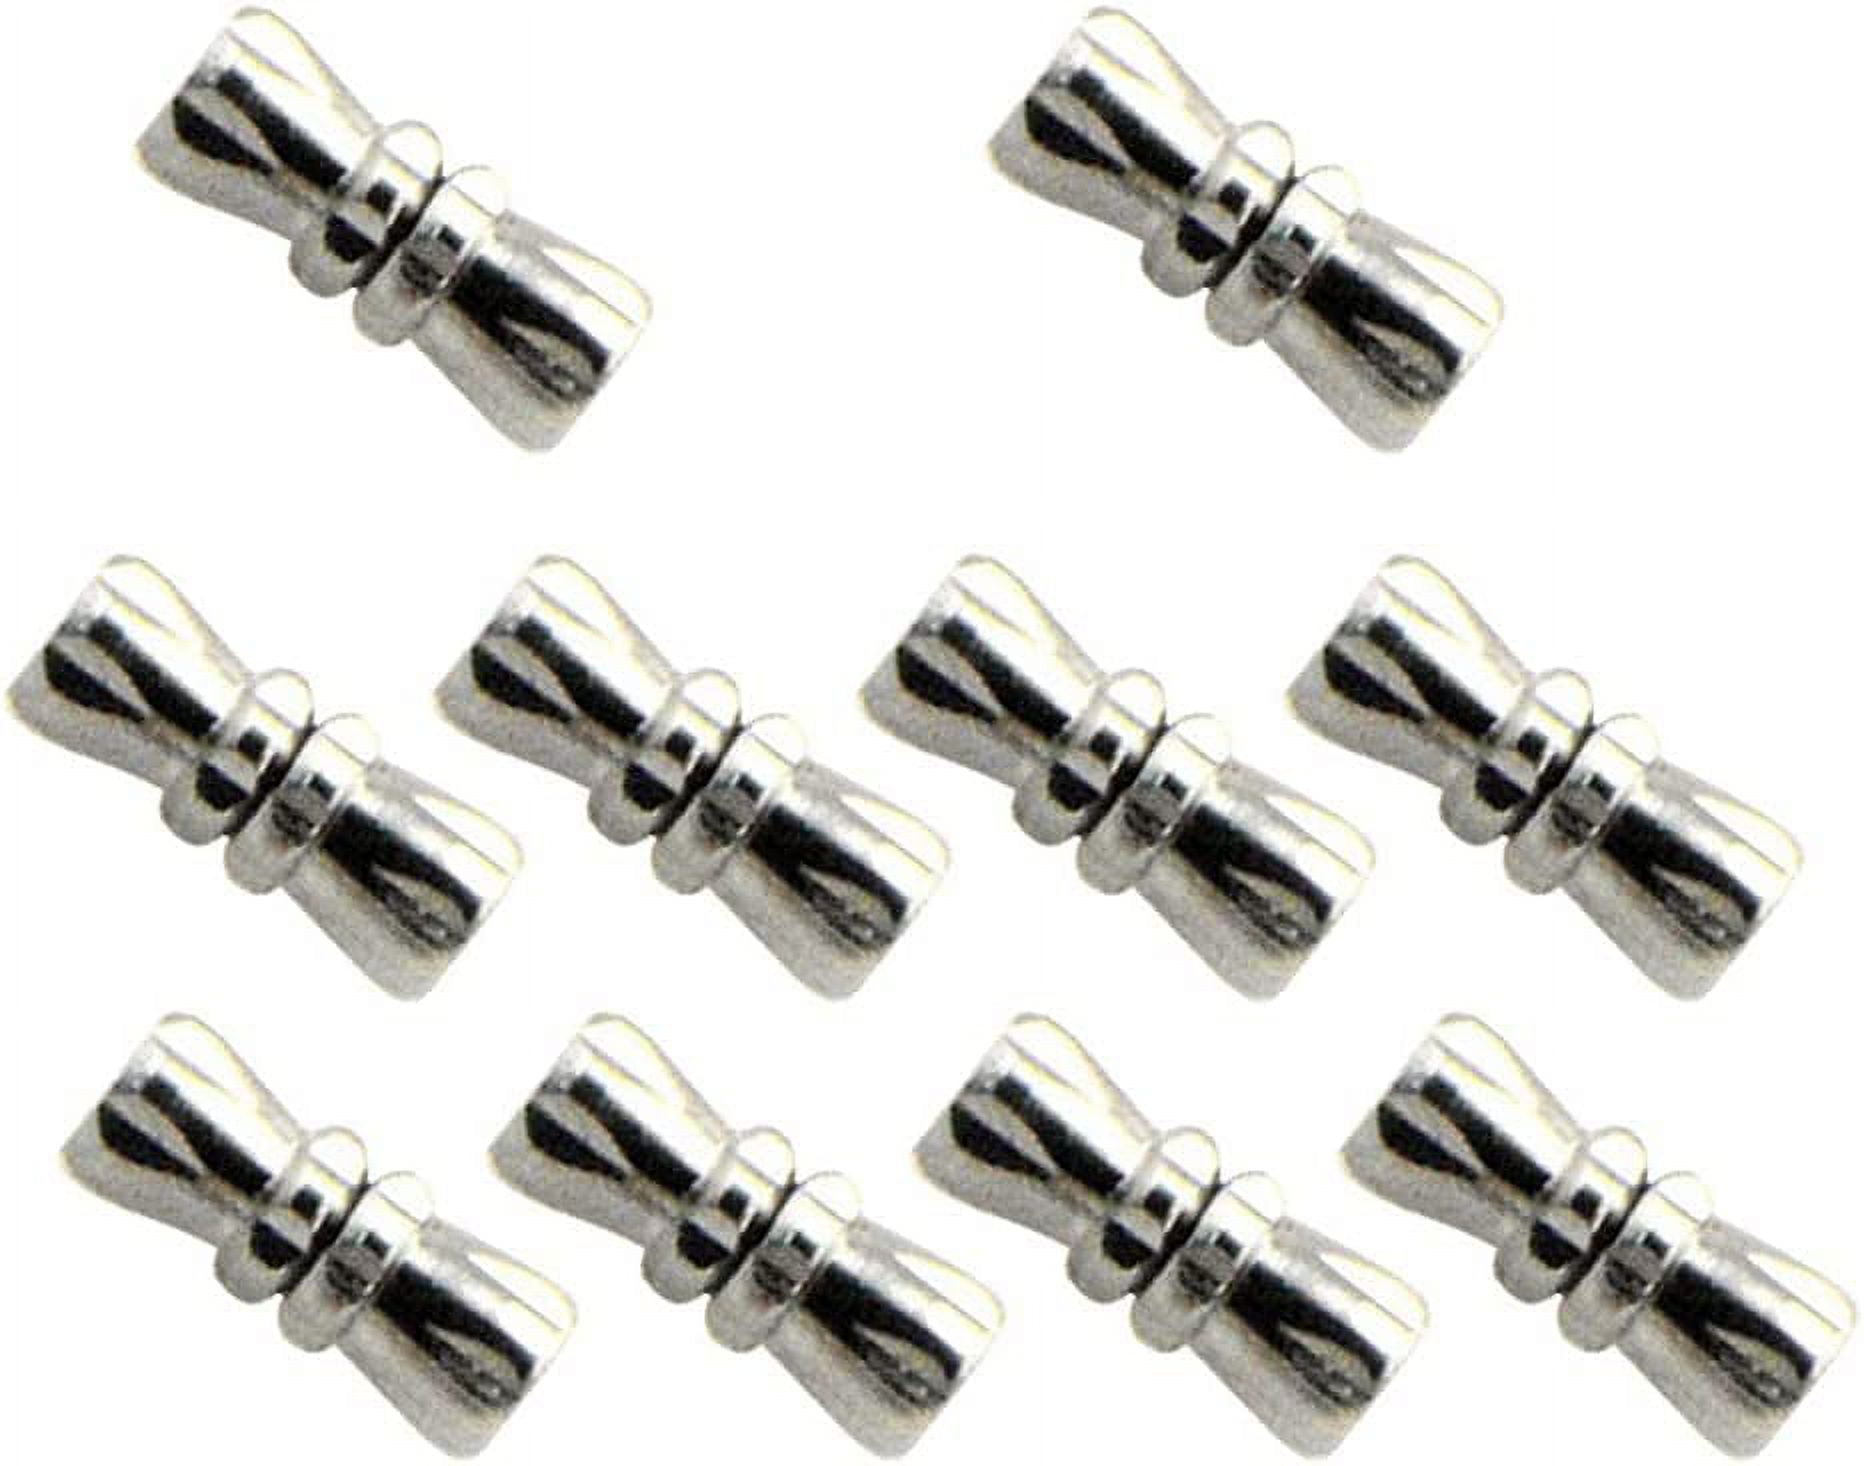 Small Screw Eye Pin / Screw Eye Hook / Screw Hook Bails / Screw Eye Bails  (5mm x 11mm / 50pcs / Antique Bronze) Pendant Charms Making F122